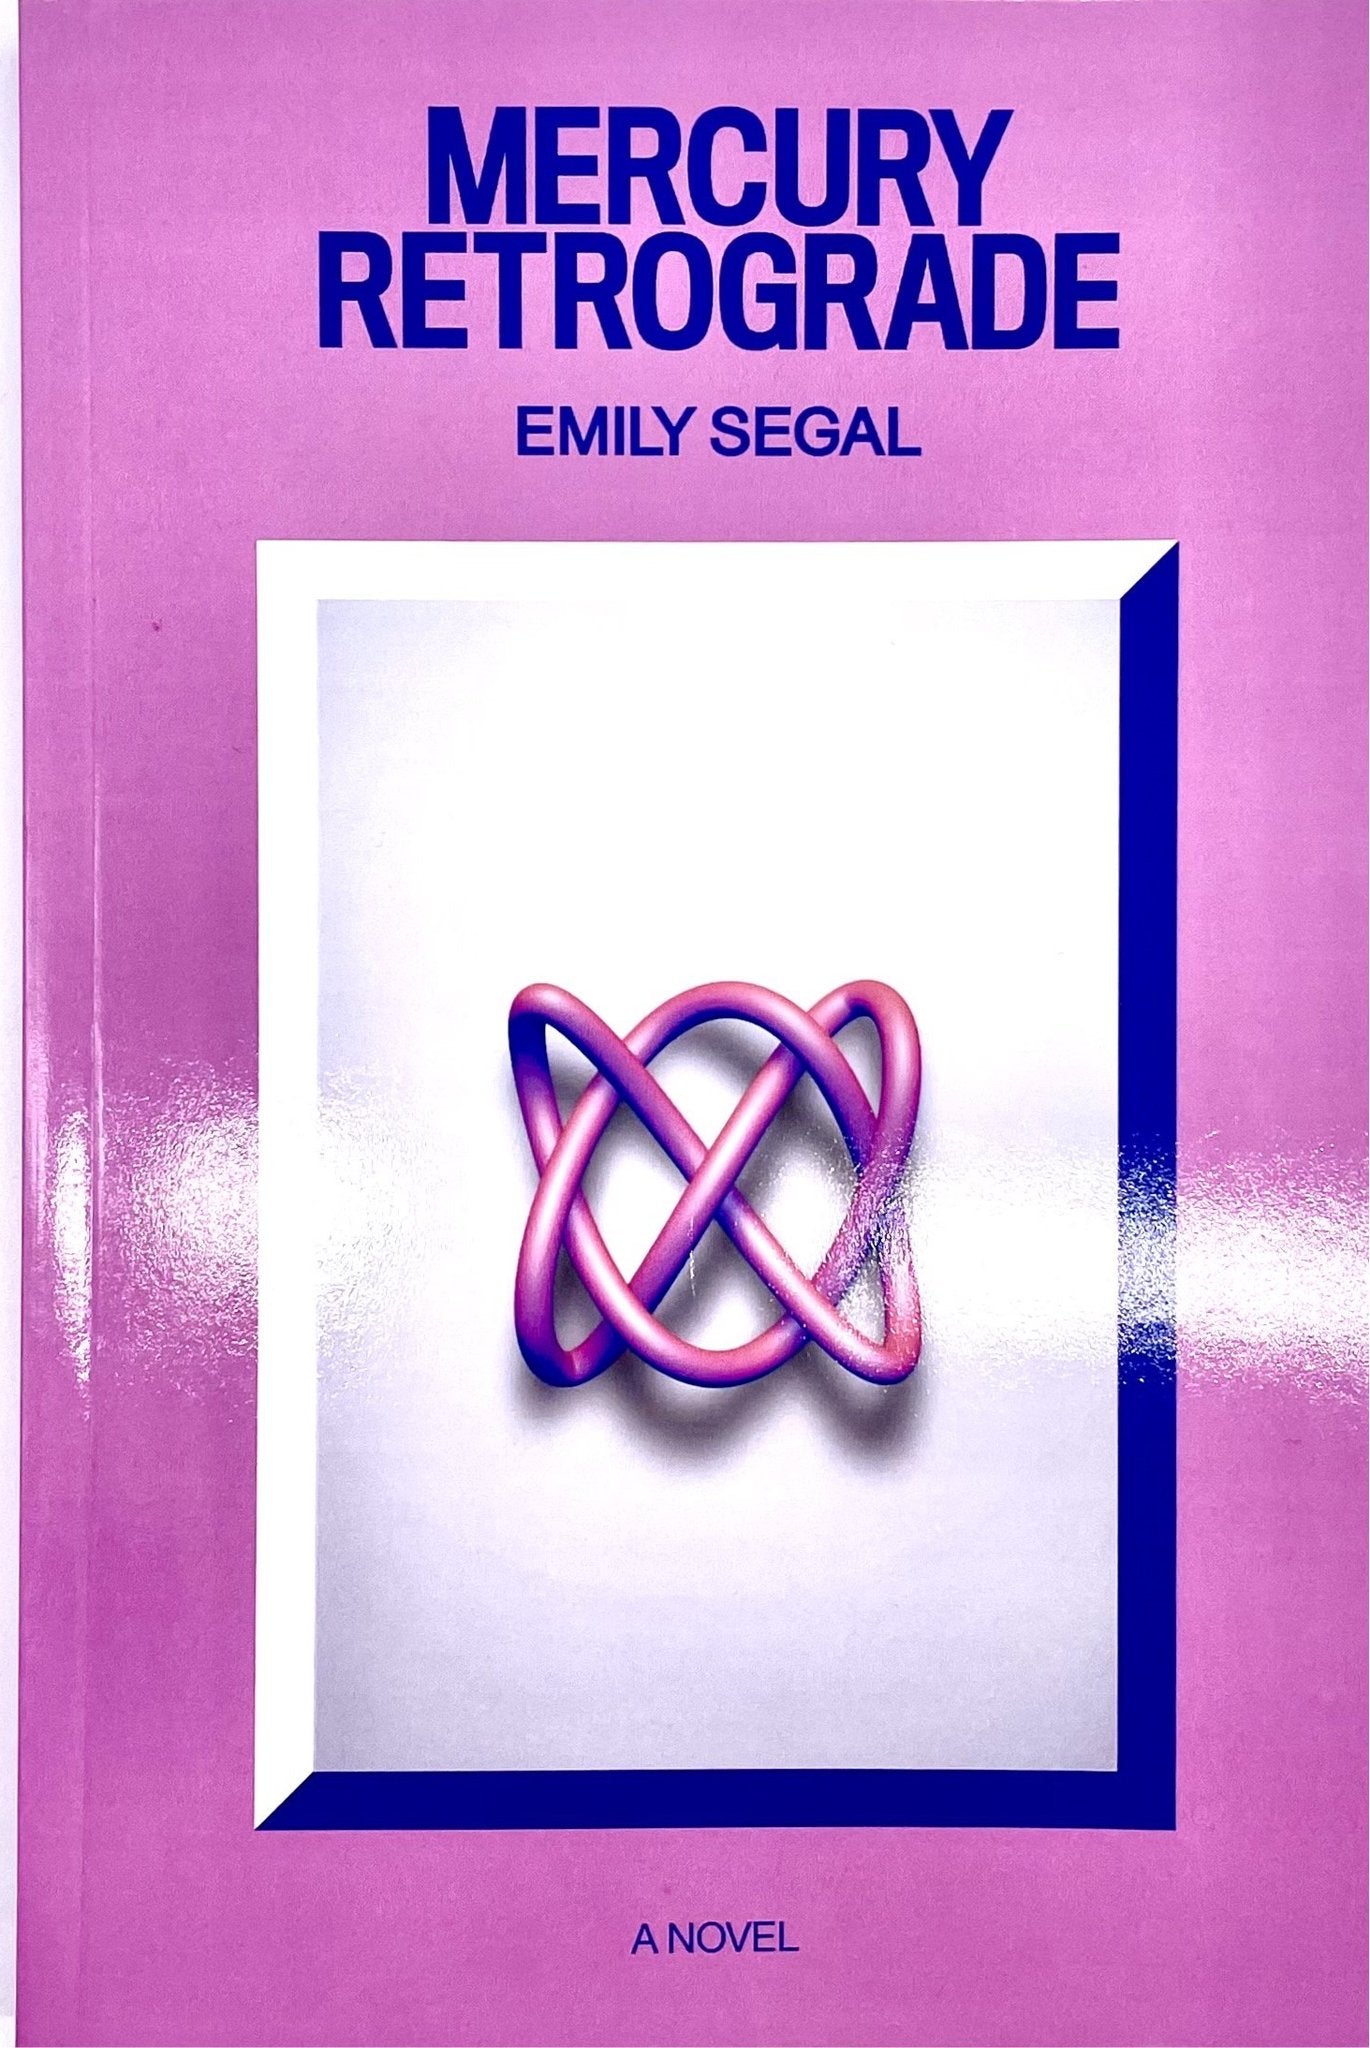 Book cover of Mercury Retrograde by Emily Segal.